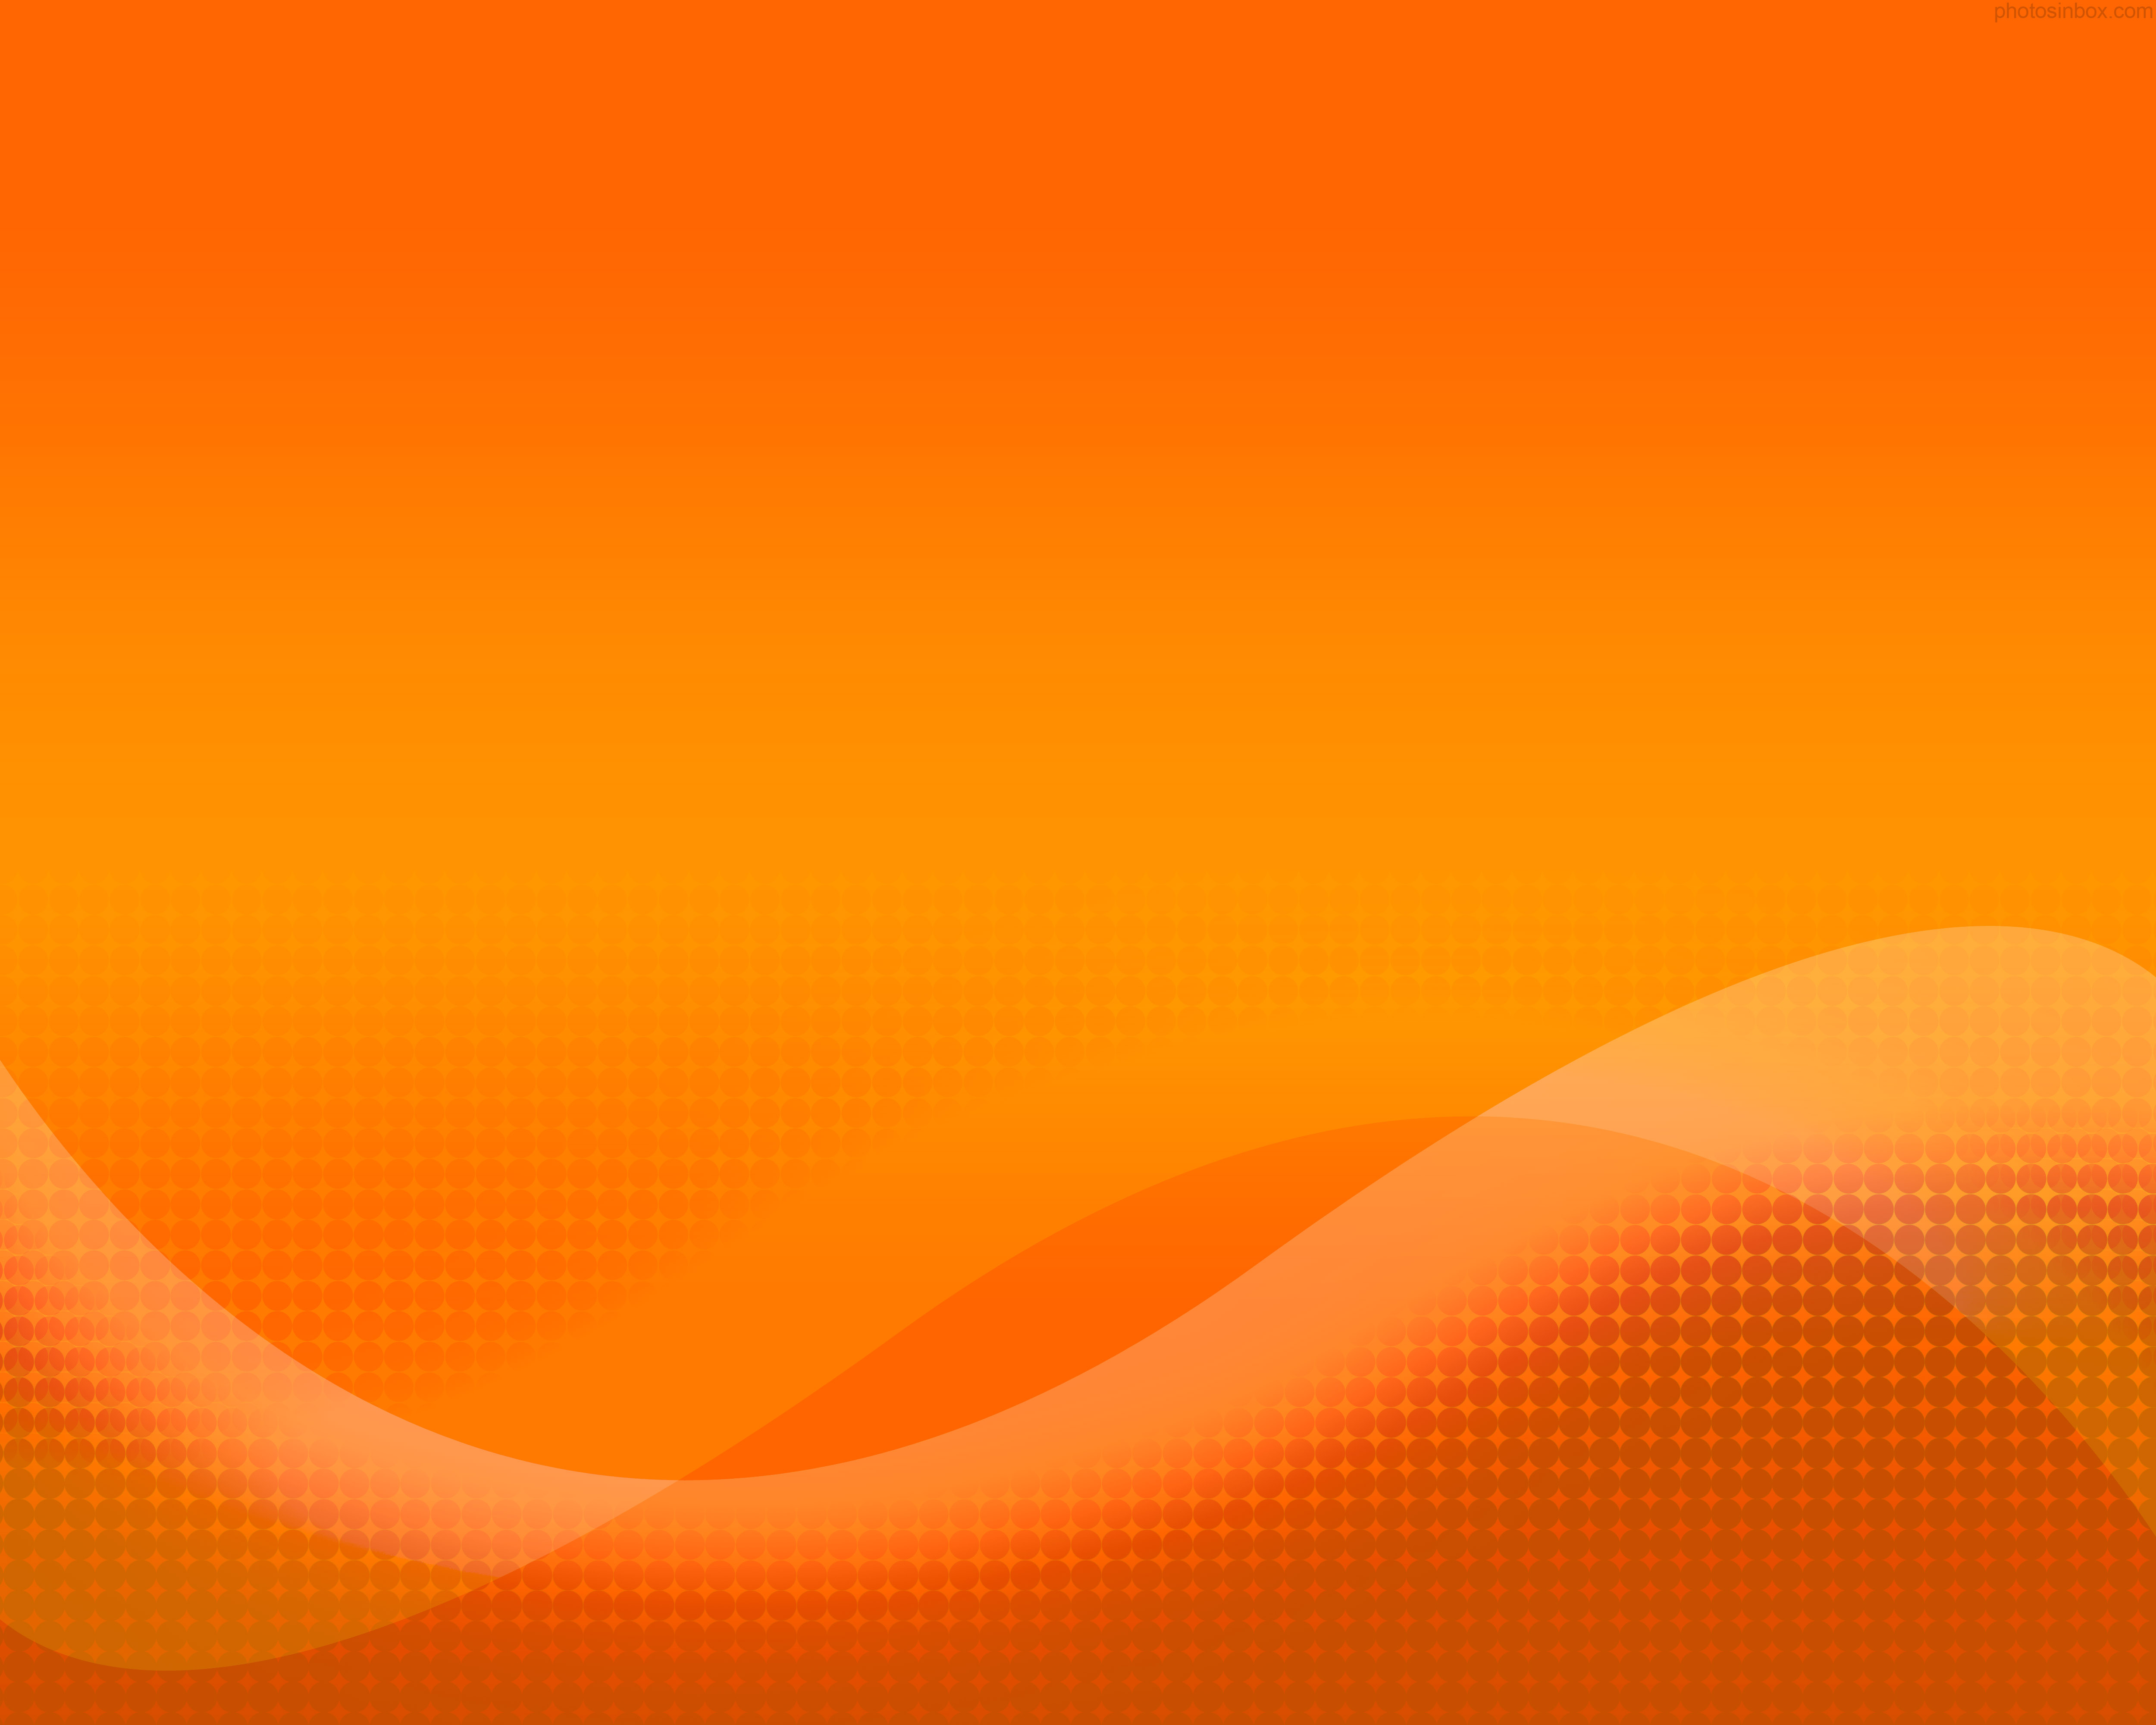 Abstract orange halftone background PhotosInBox 5000x4000